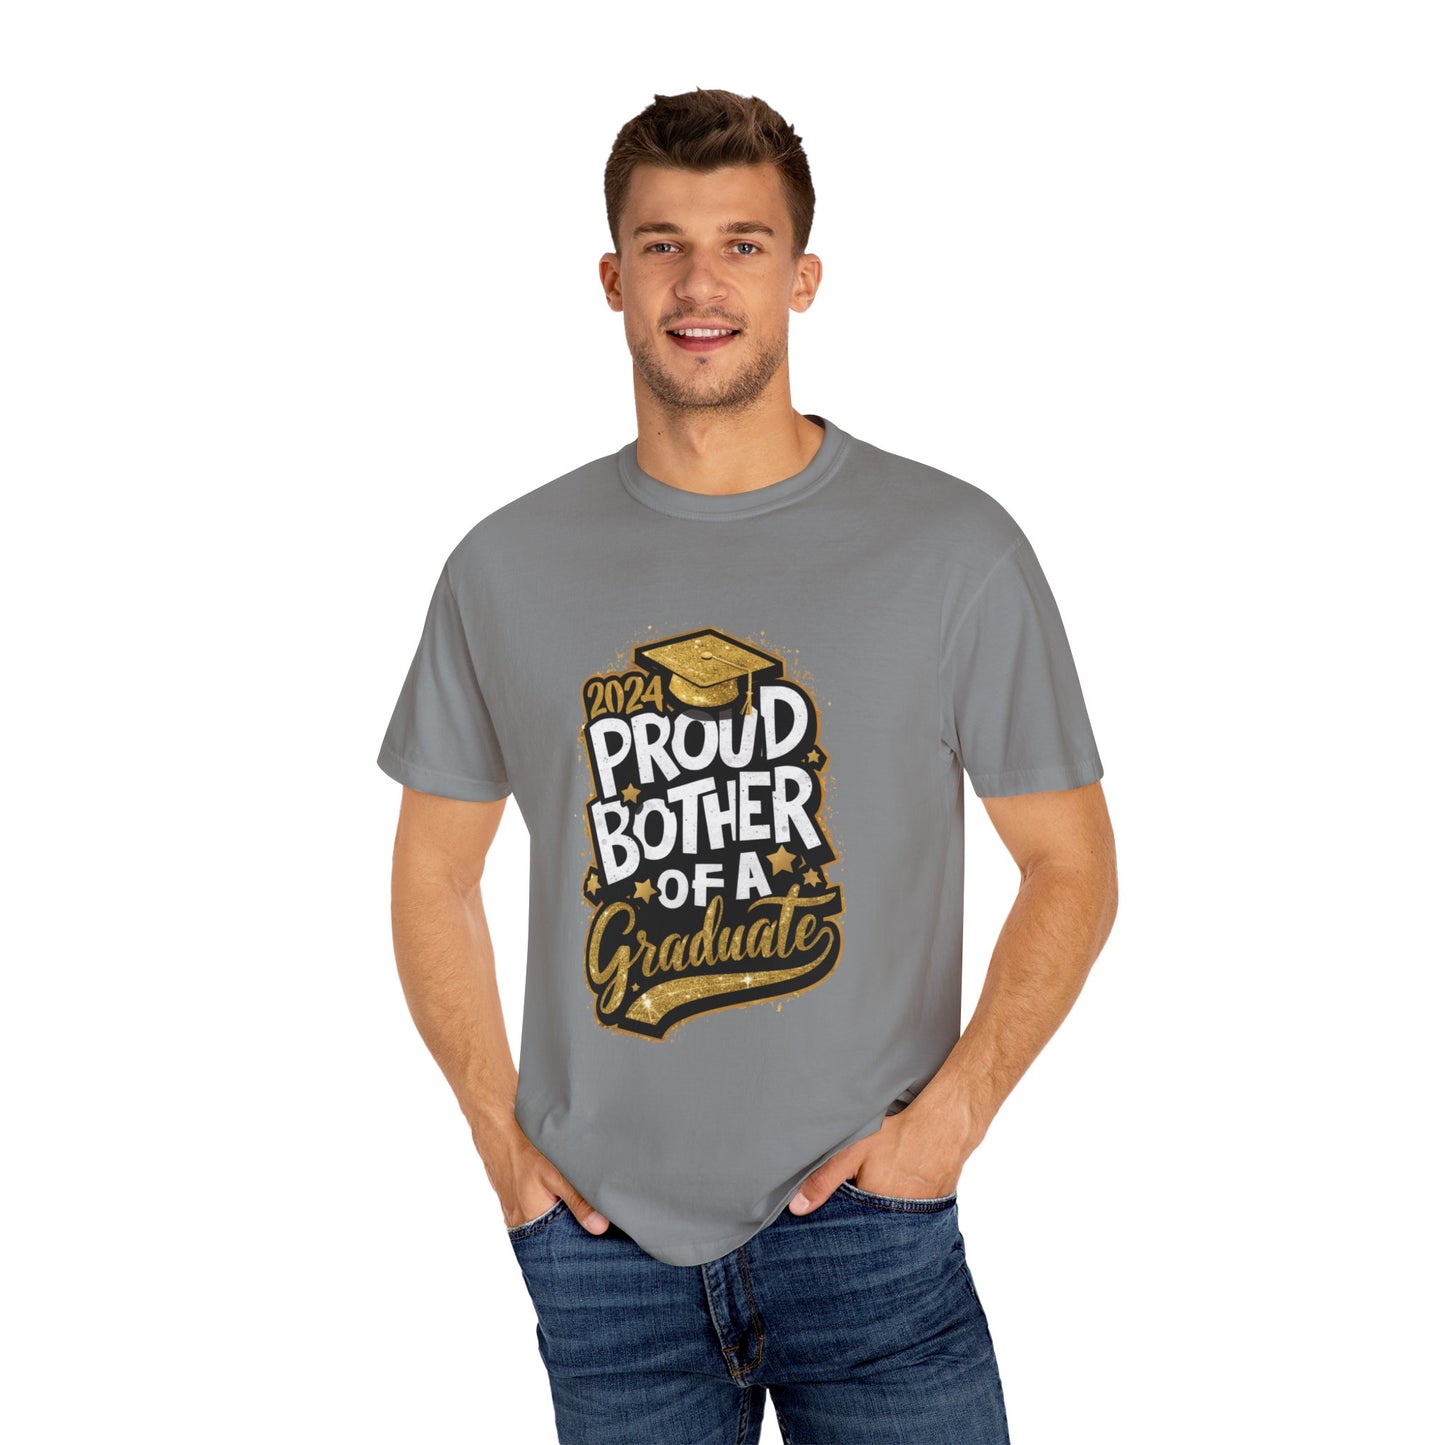 Proud Brother of a 2024 Graduate Unisex Garment-dyed T-shirt Cotton Funny Humorous Graphic Soft Premium Unisex Men Women Granite T-shirt Birthday Gift-27